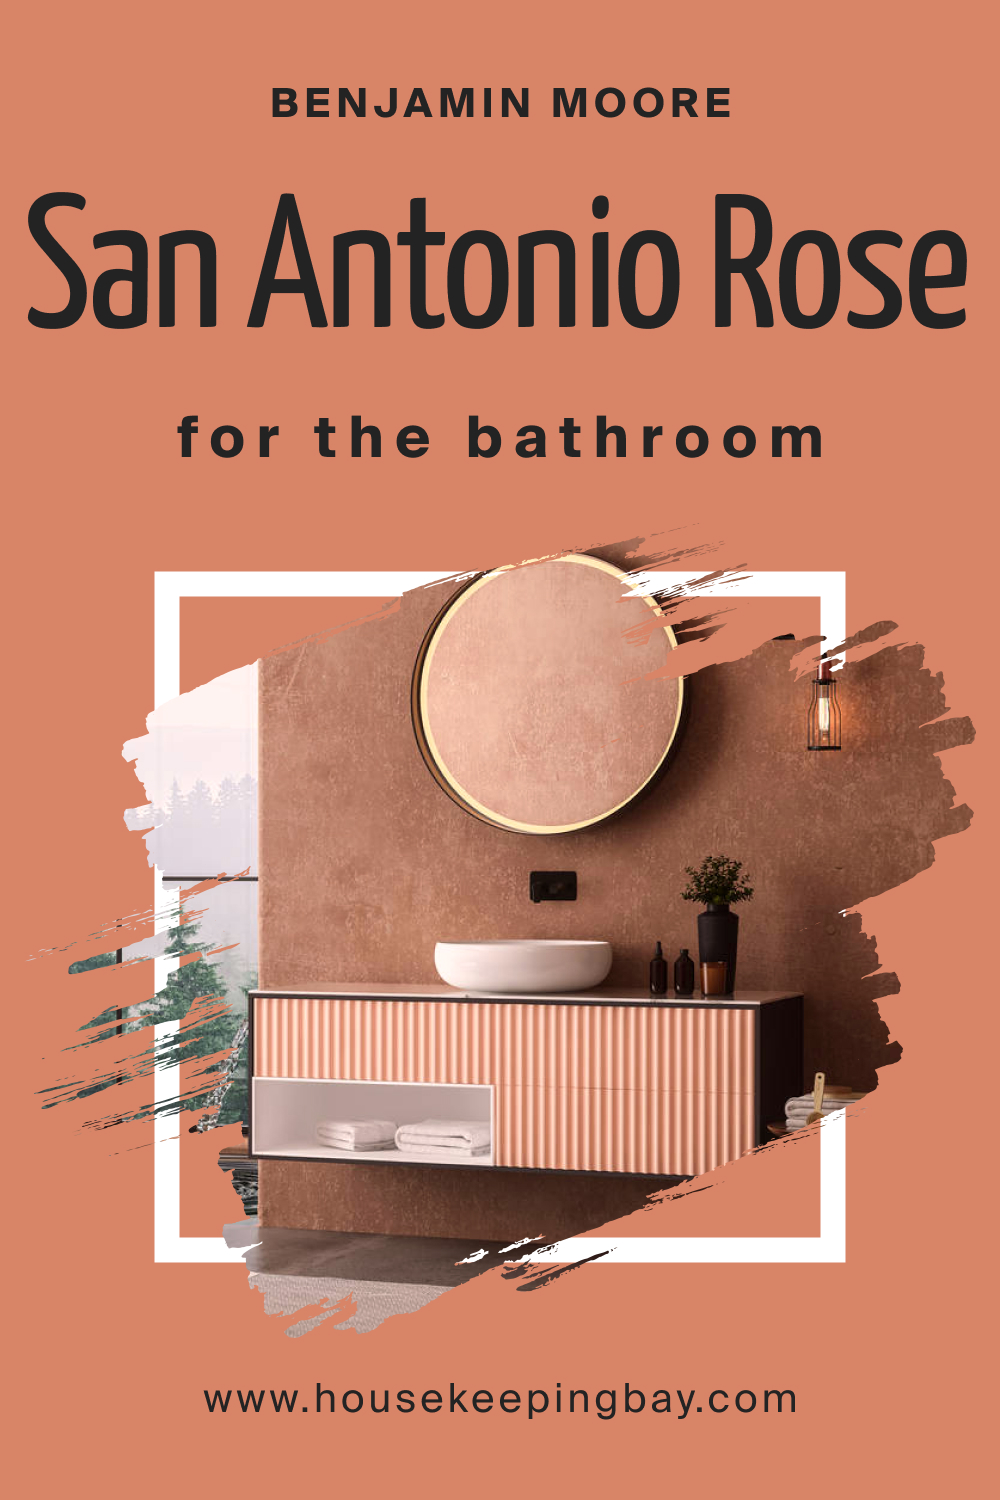 Benjamin Moore. San Antonio Rose 027 for the Bathroom